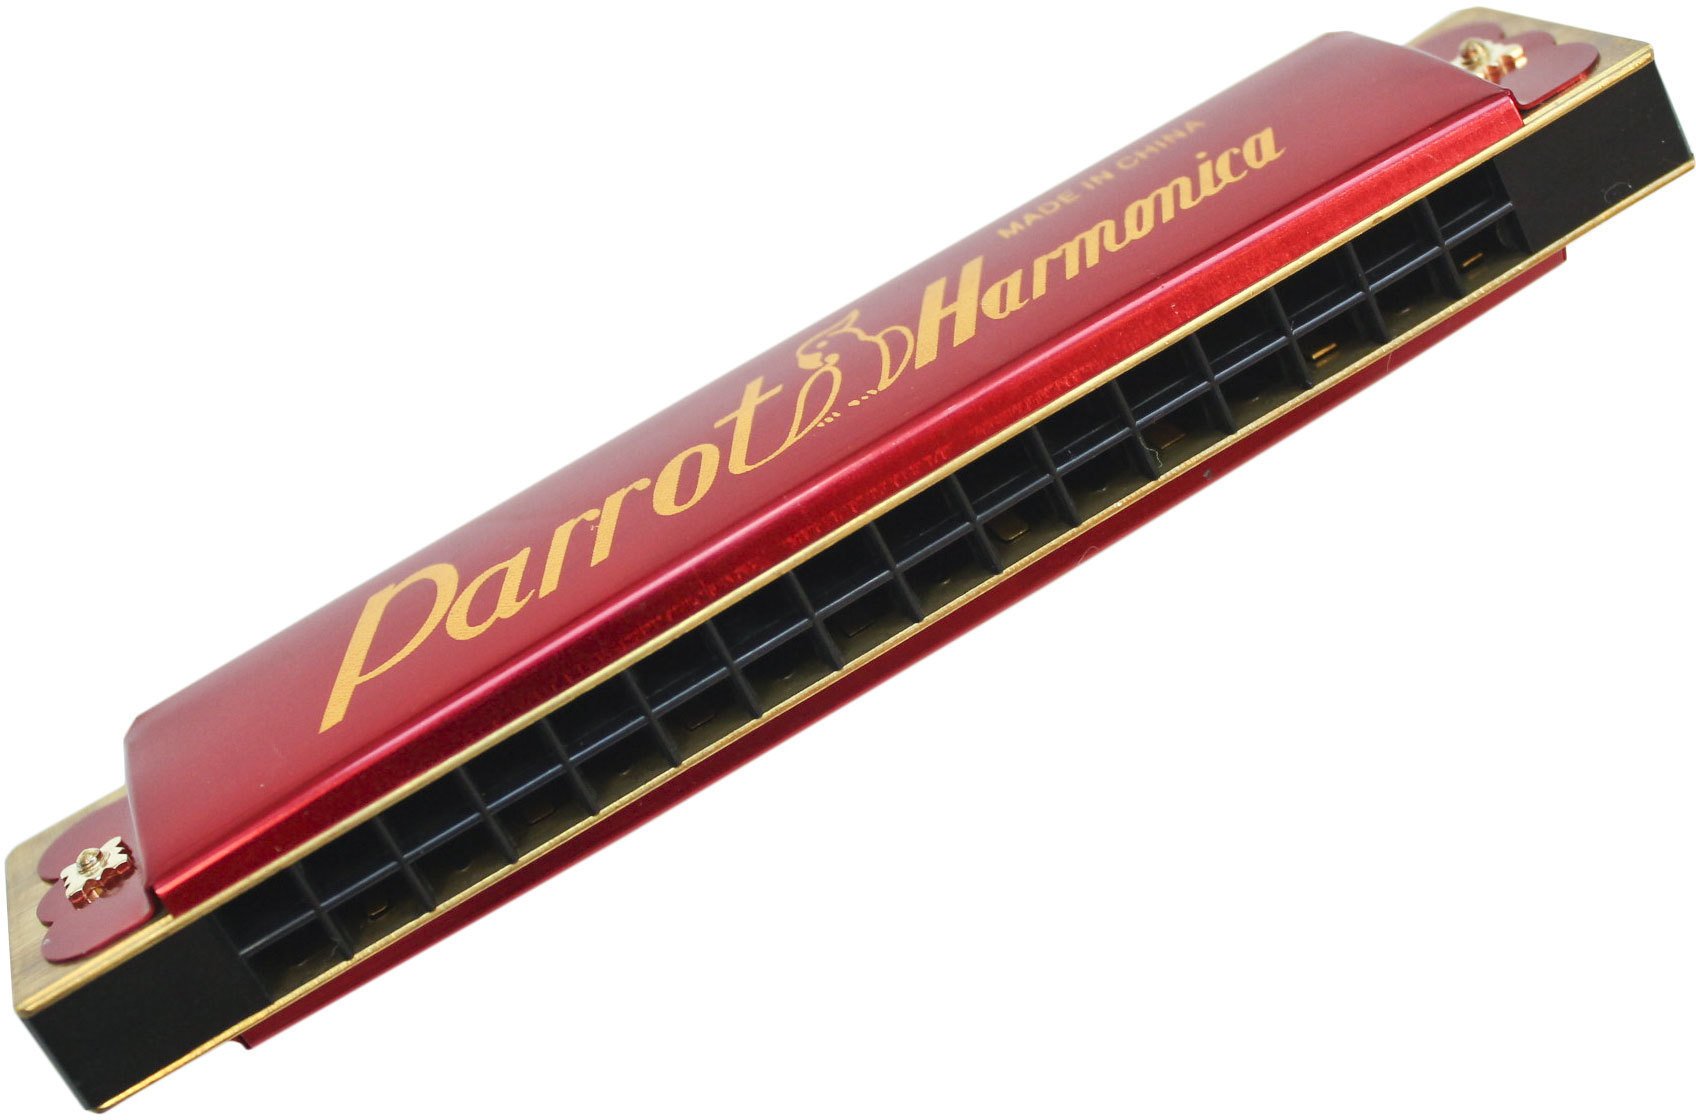 Diatonic harmonica Parrot HD 16 1 C